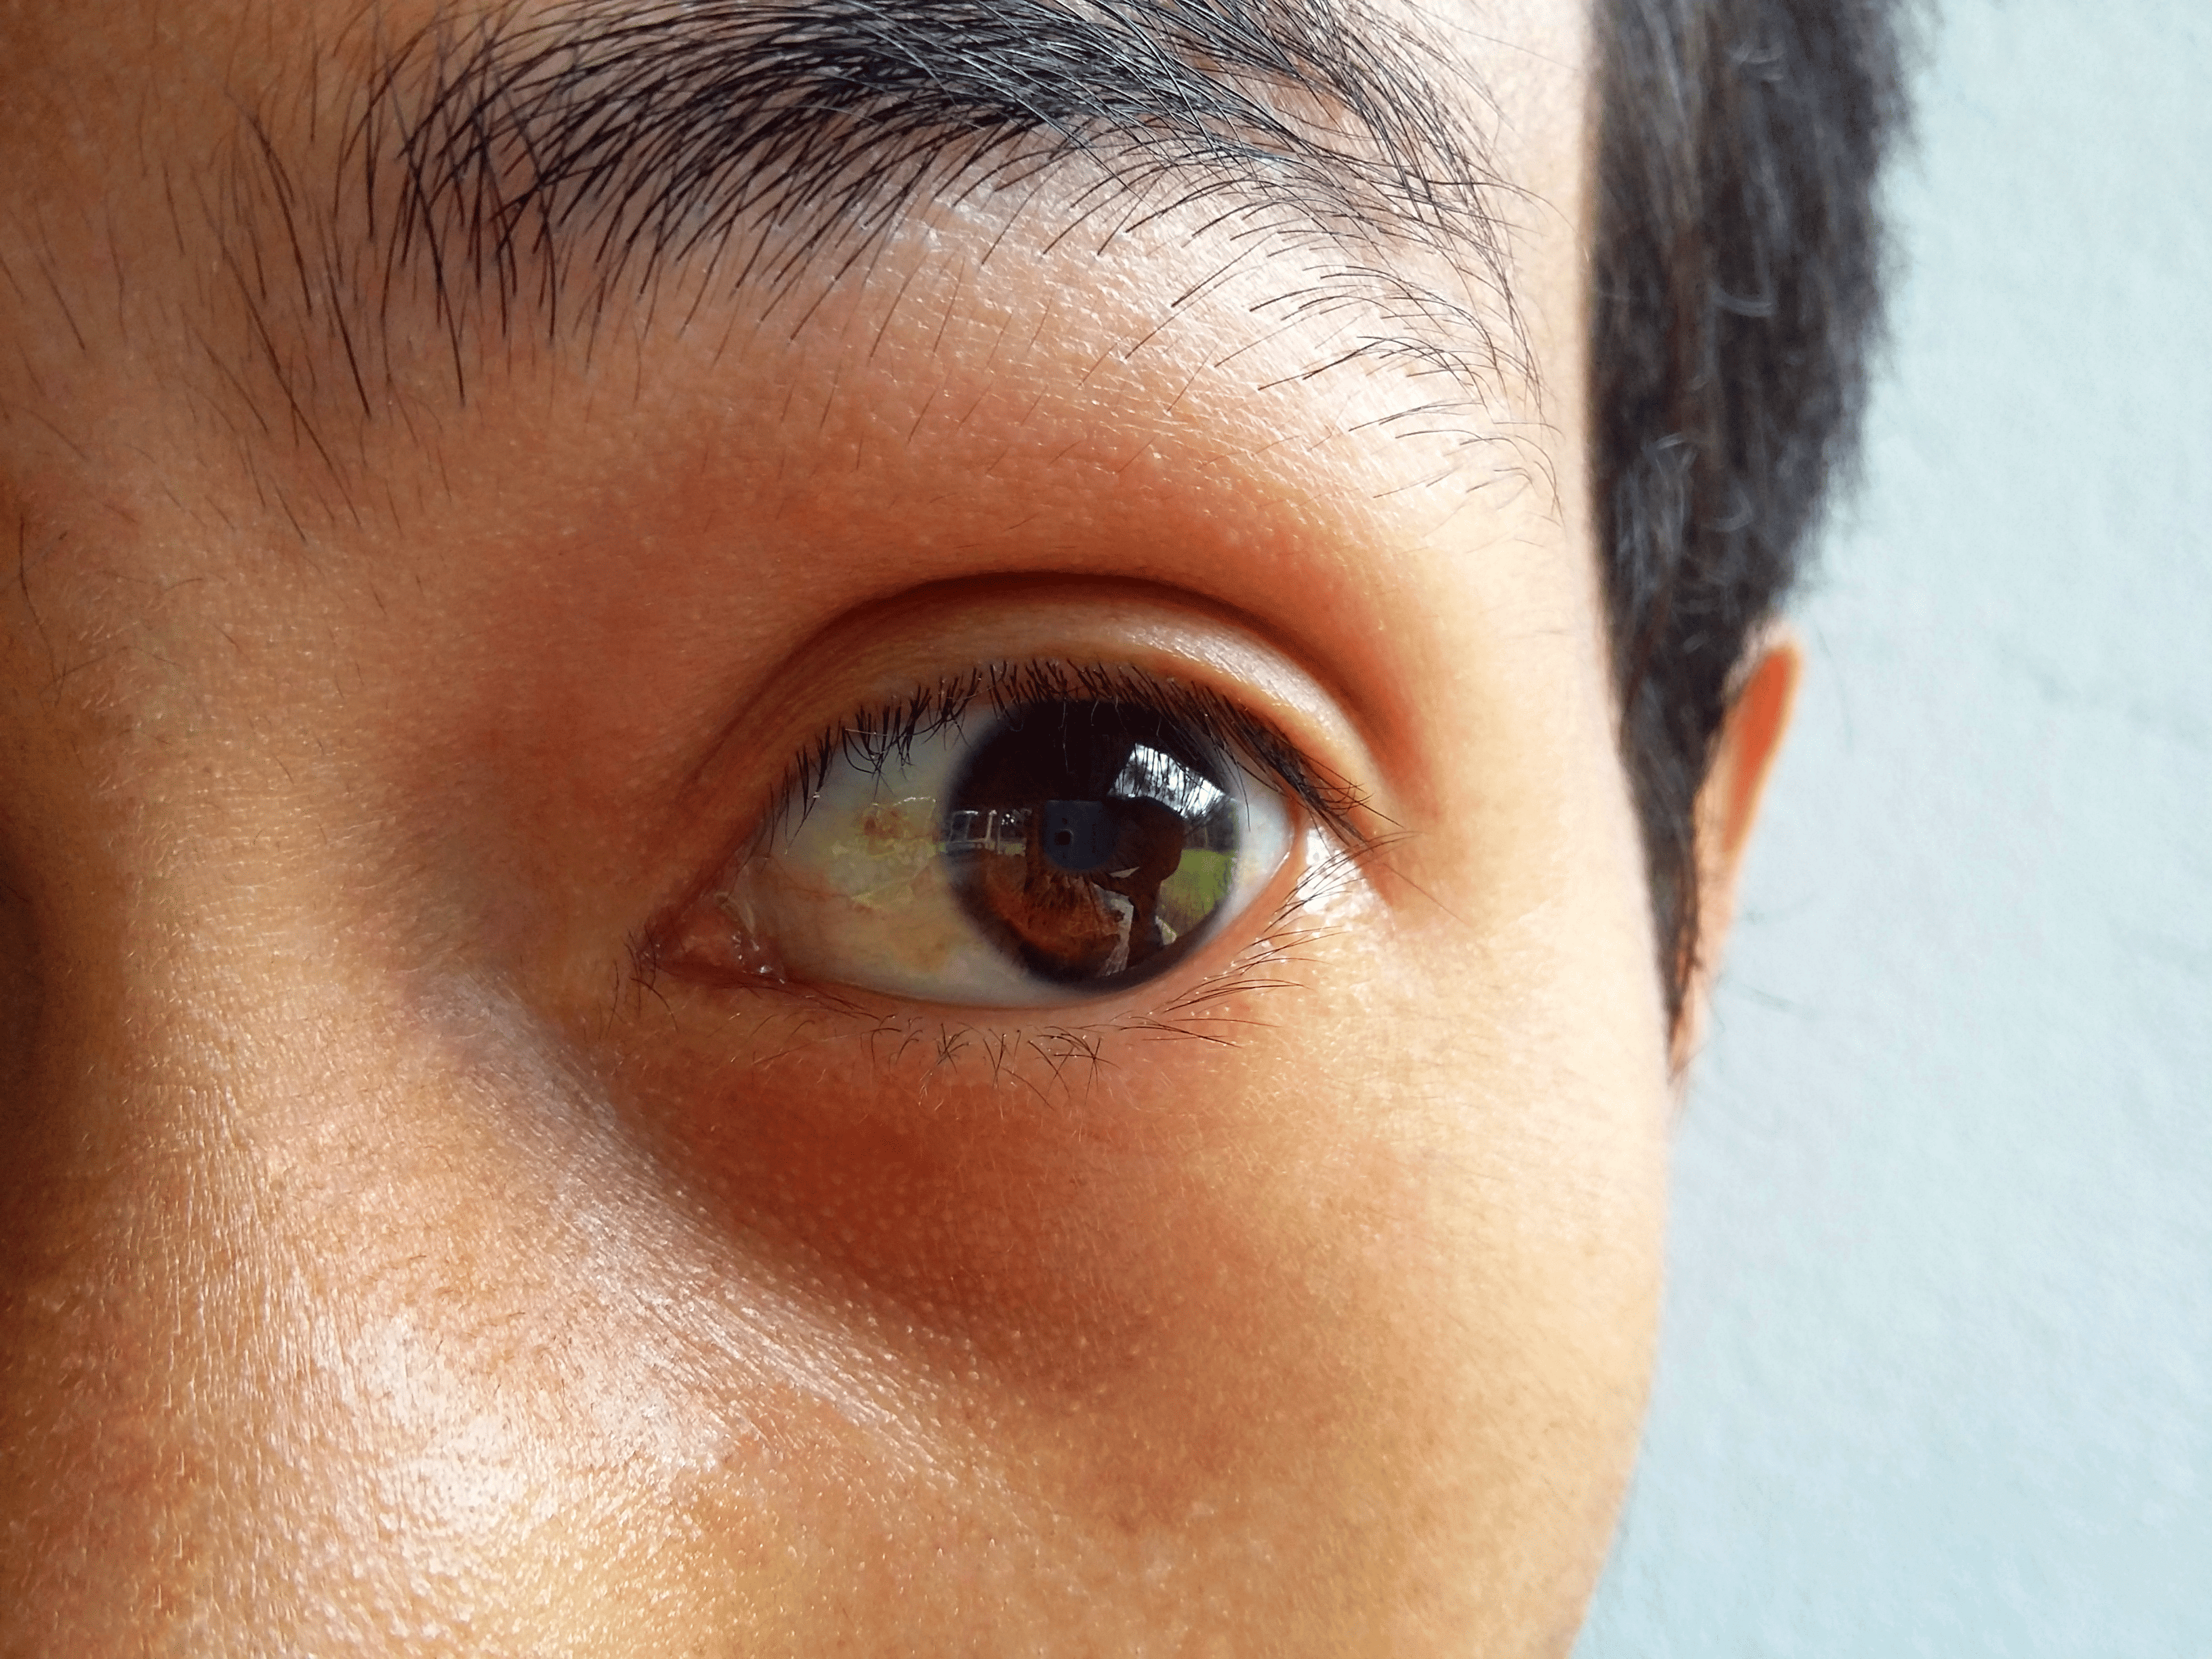 Pinguecula: Yellow bump on eye, Causes & treatment